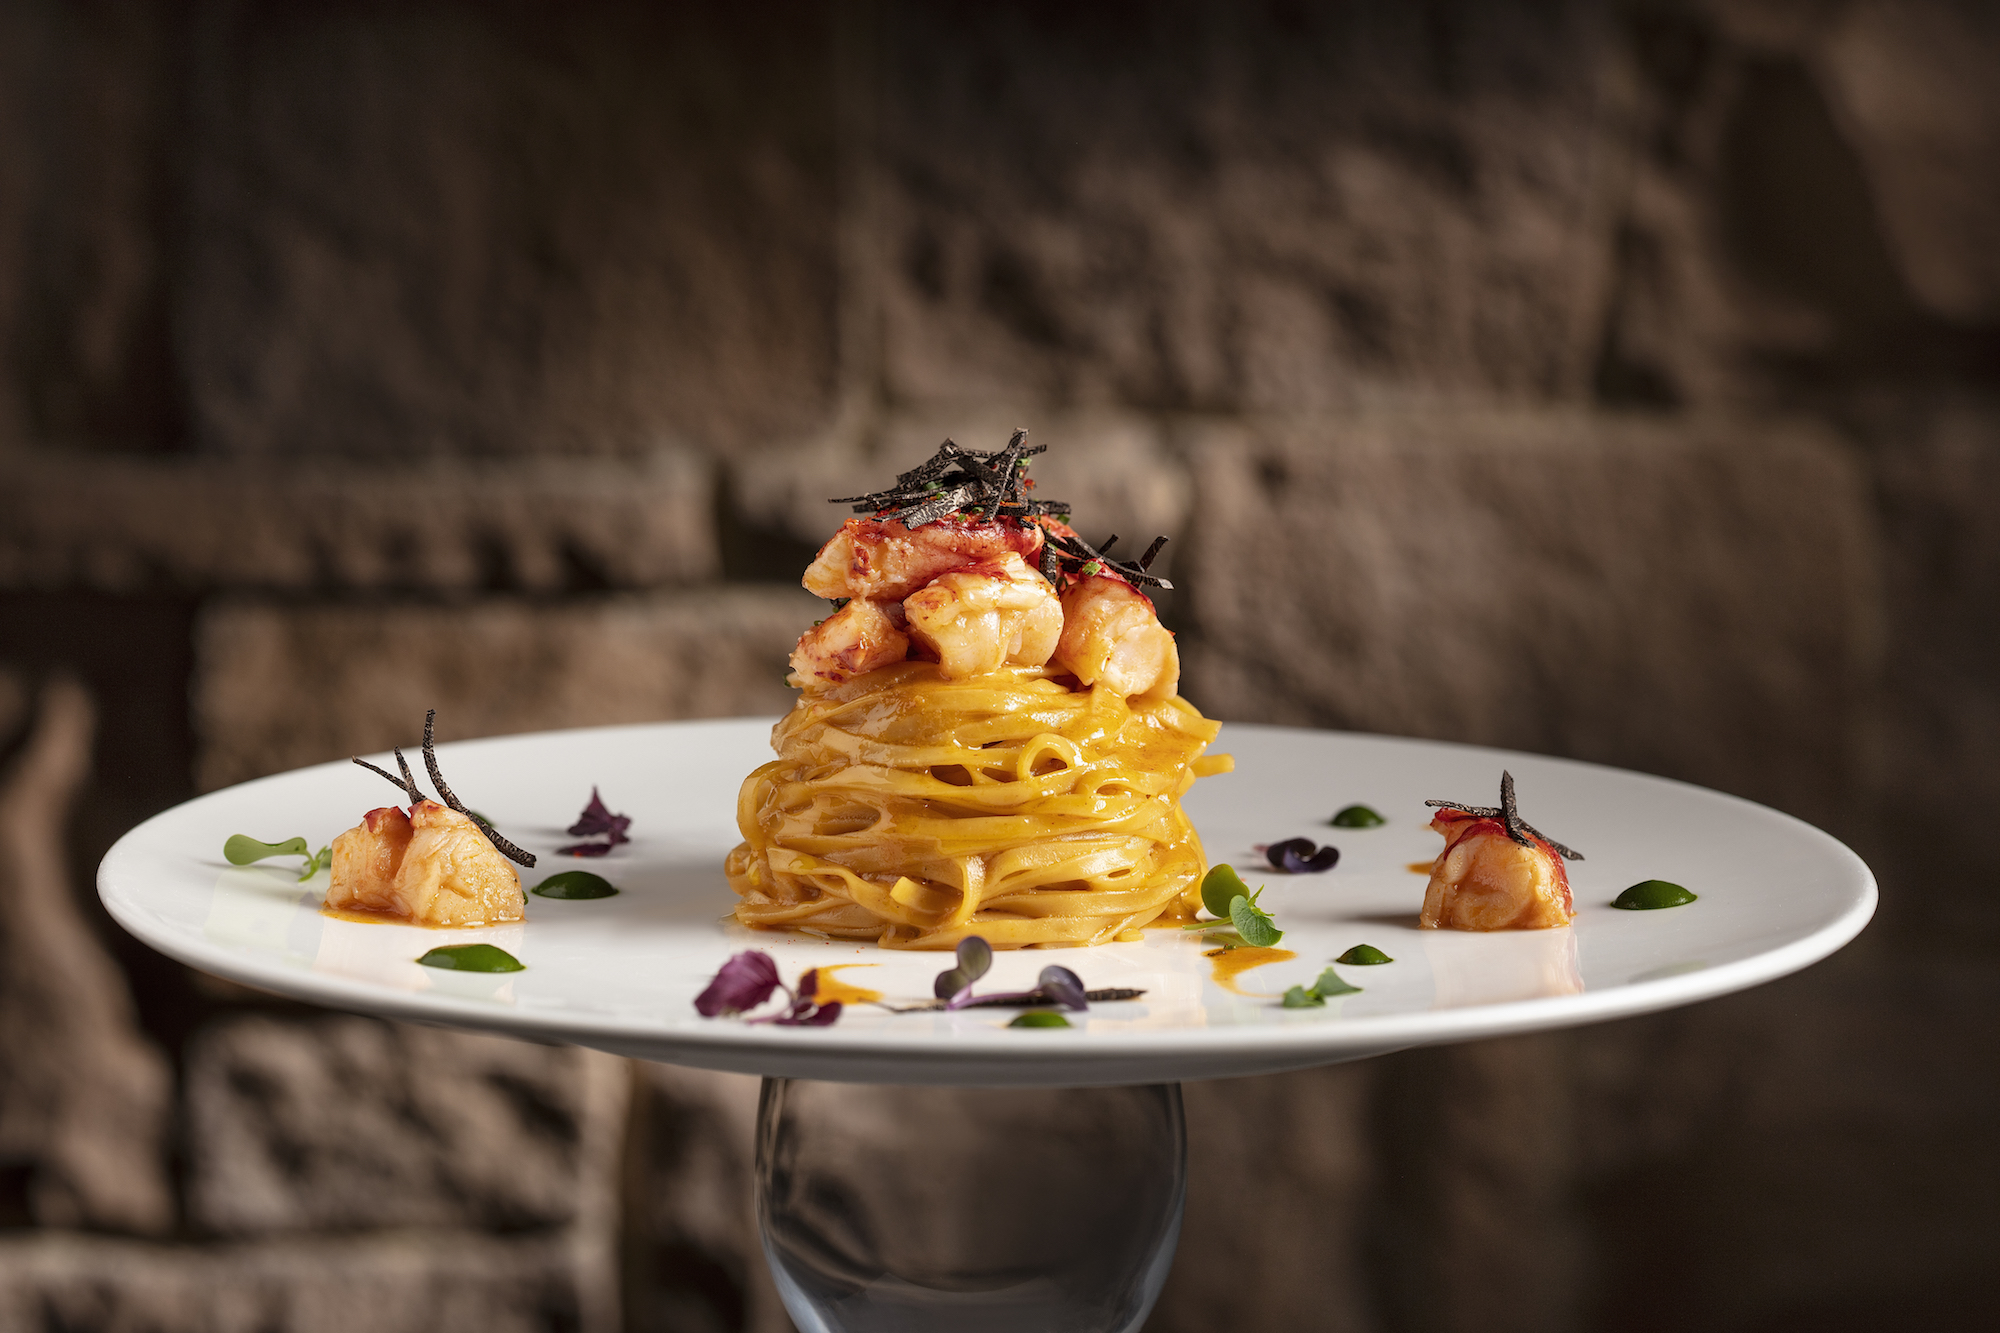 VM Portofino – Homemade Tajarin pasta, lobster, lobster sauce, seasonal fresh truffle